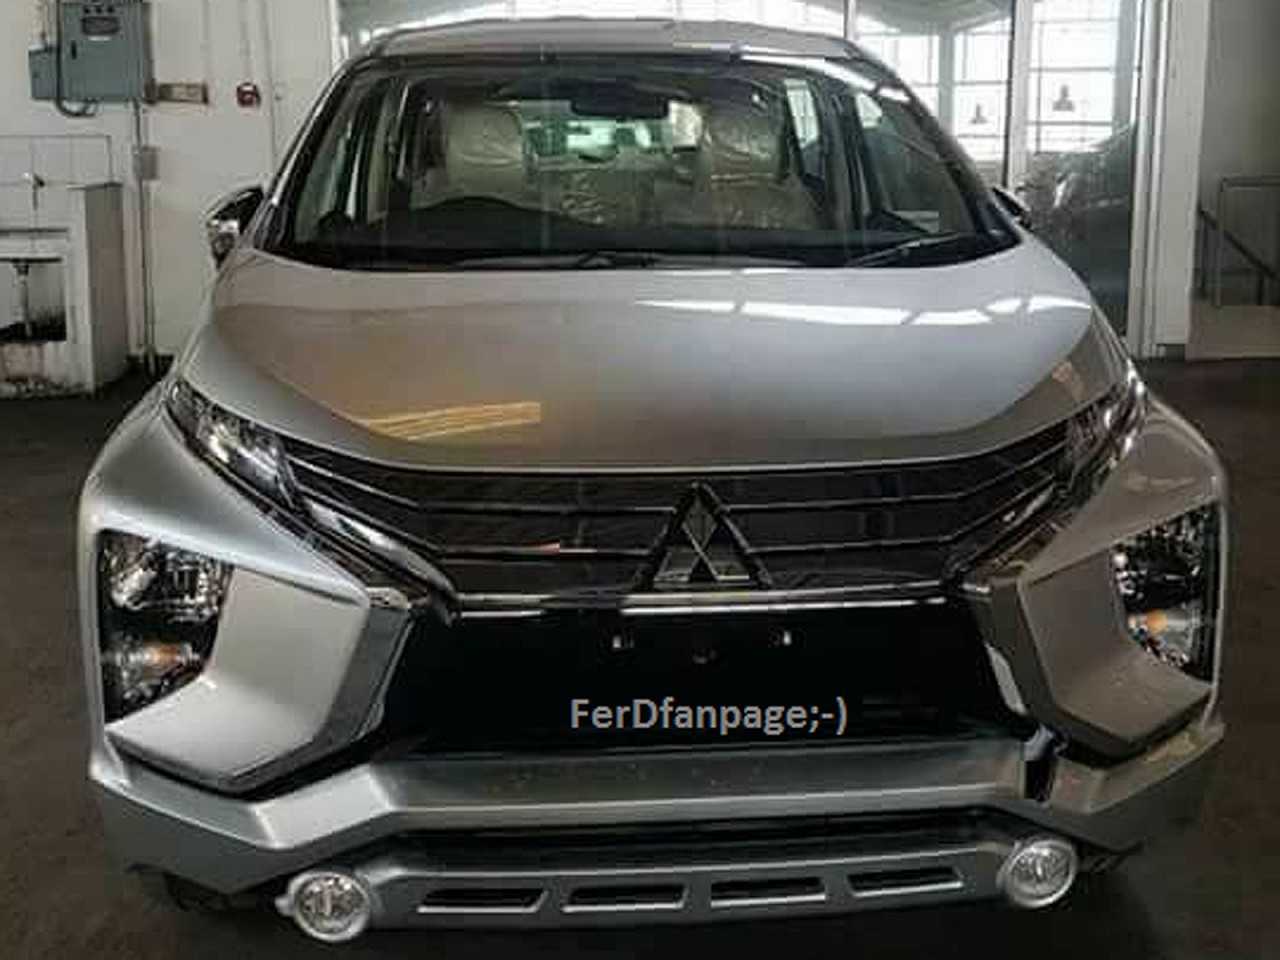 Possvel nova gerao do Mitsubishi Pajero que circula na internet